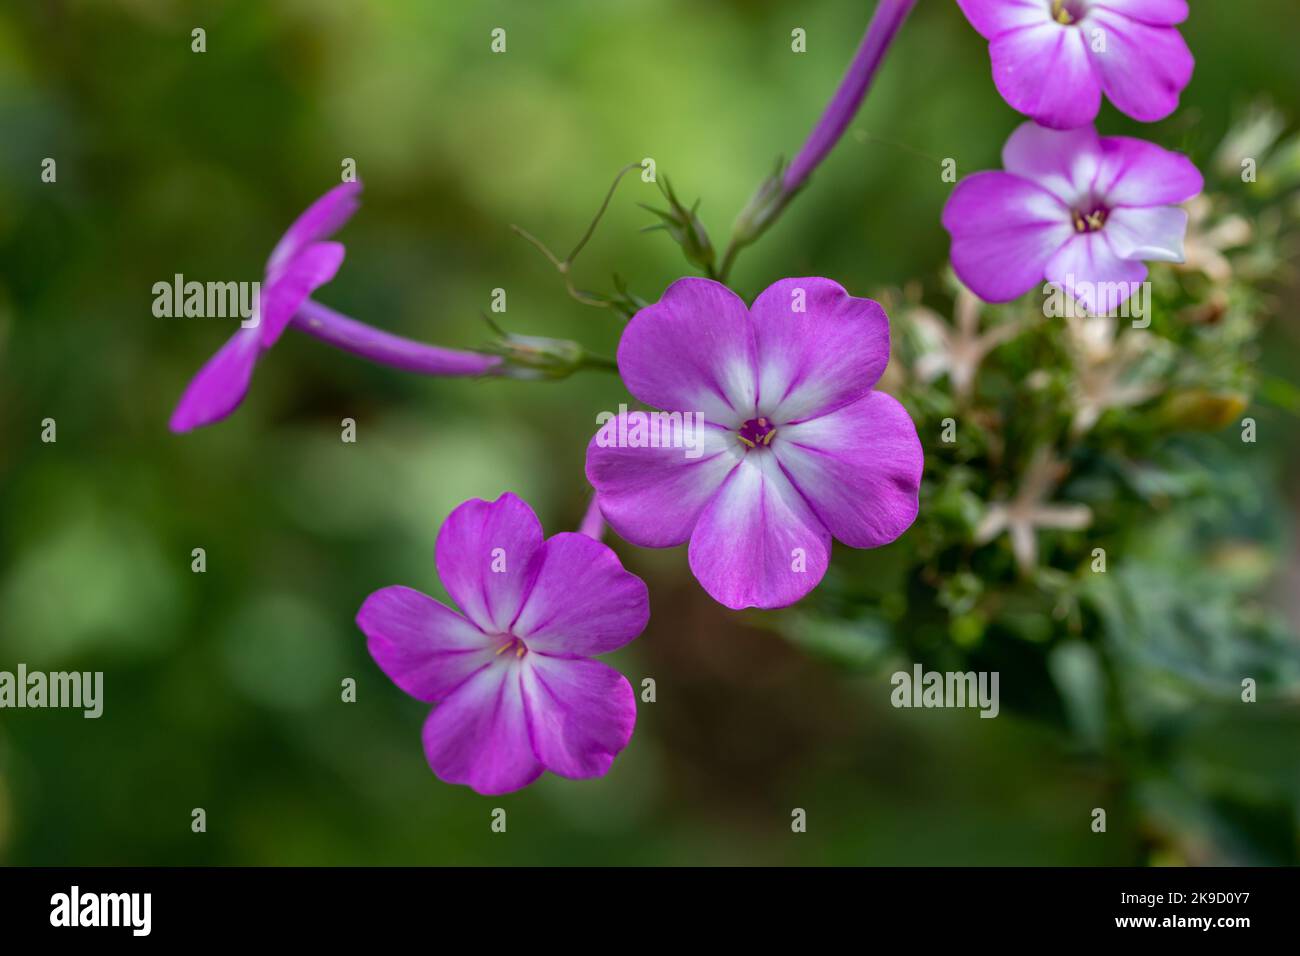 Macro view of purple blooming garden phlox (phlox paniculata) flowers in a sunny autumn garden Stock Photo